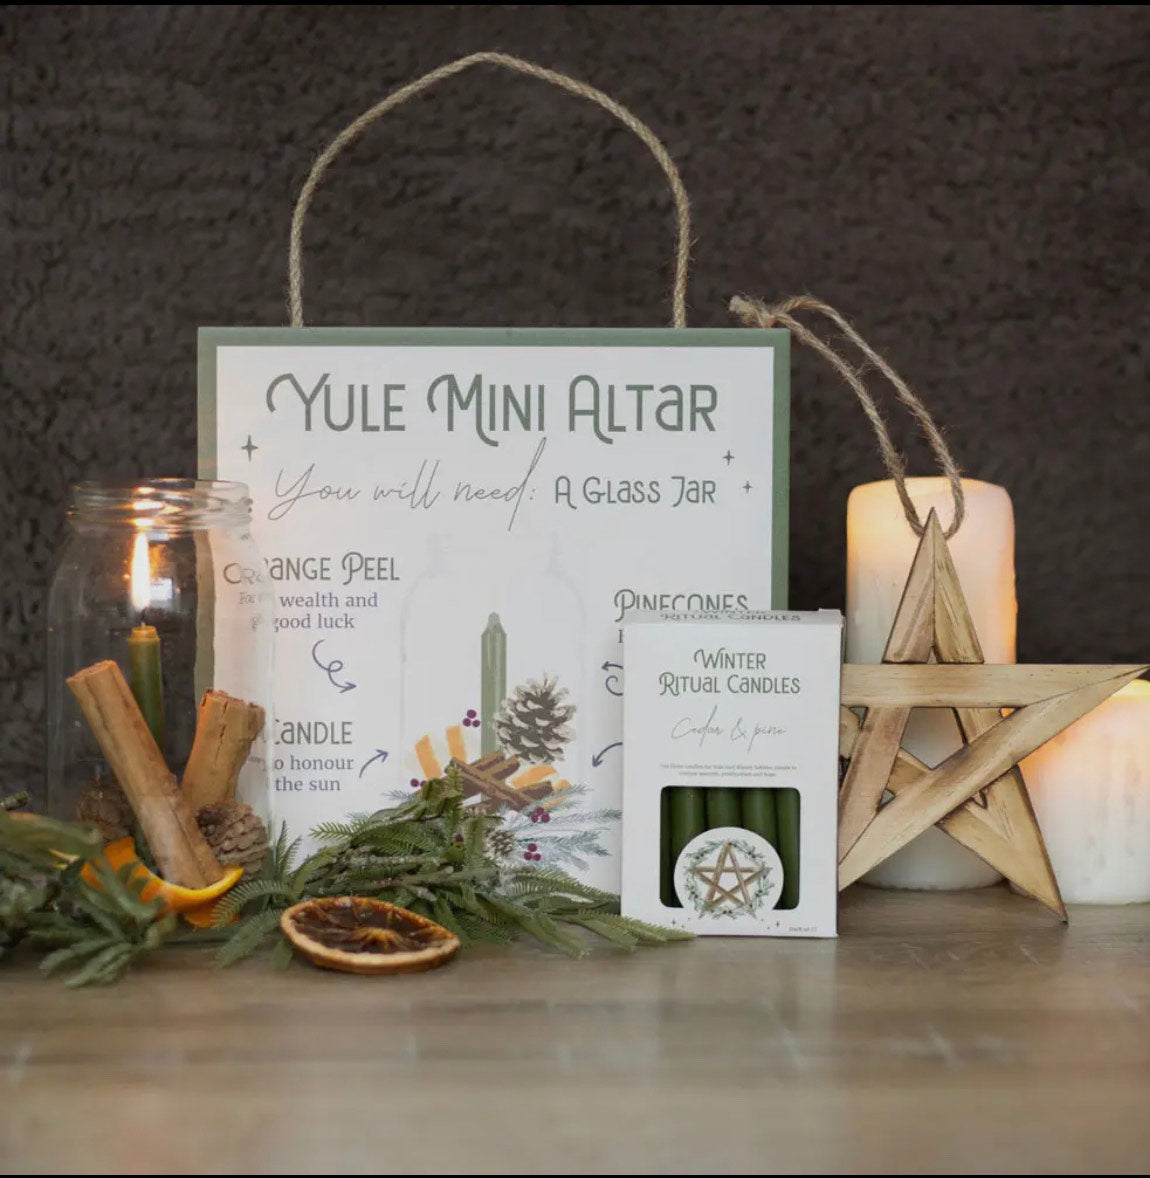 Cedar & Pine Winter Yule Ritual Magic Spell Candles